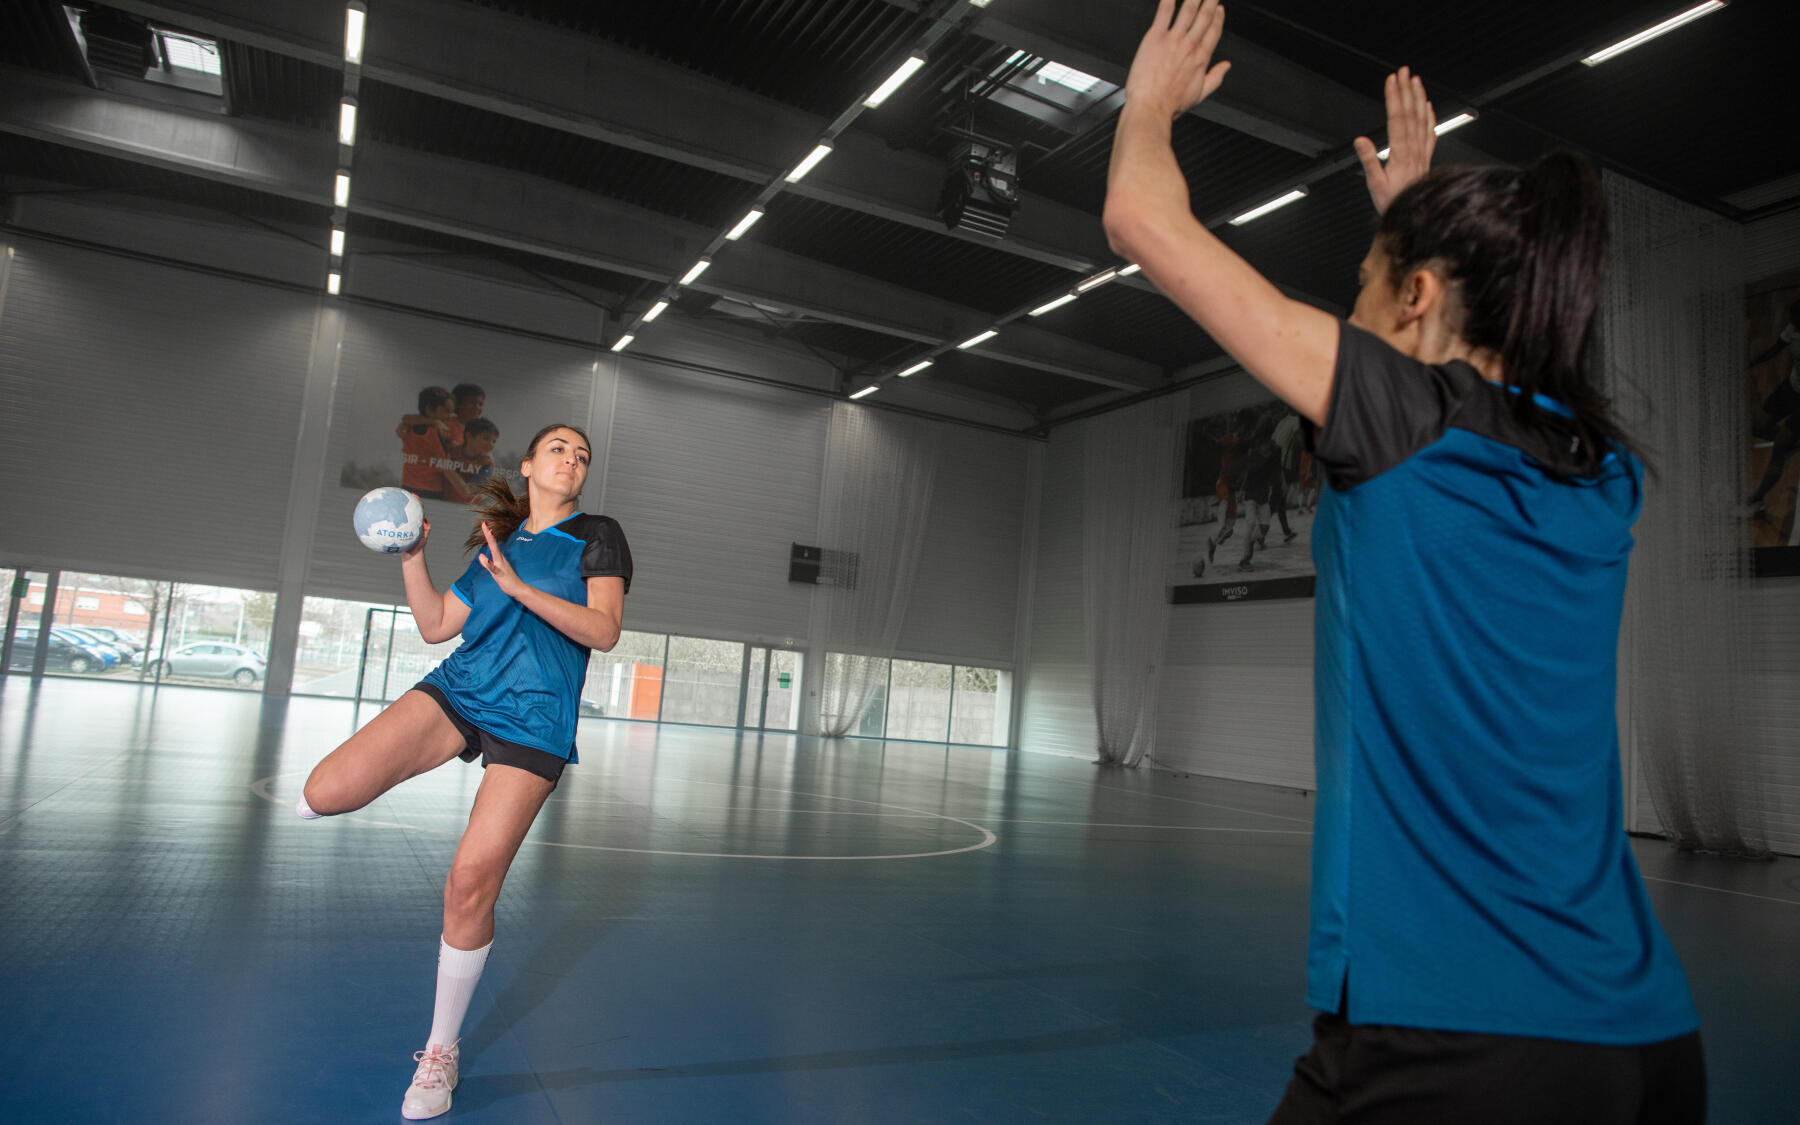 Le Handball, un sport réglementé ! 